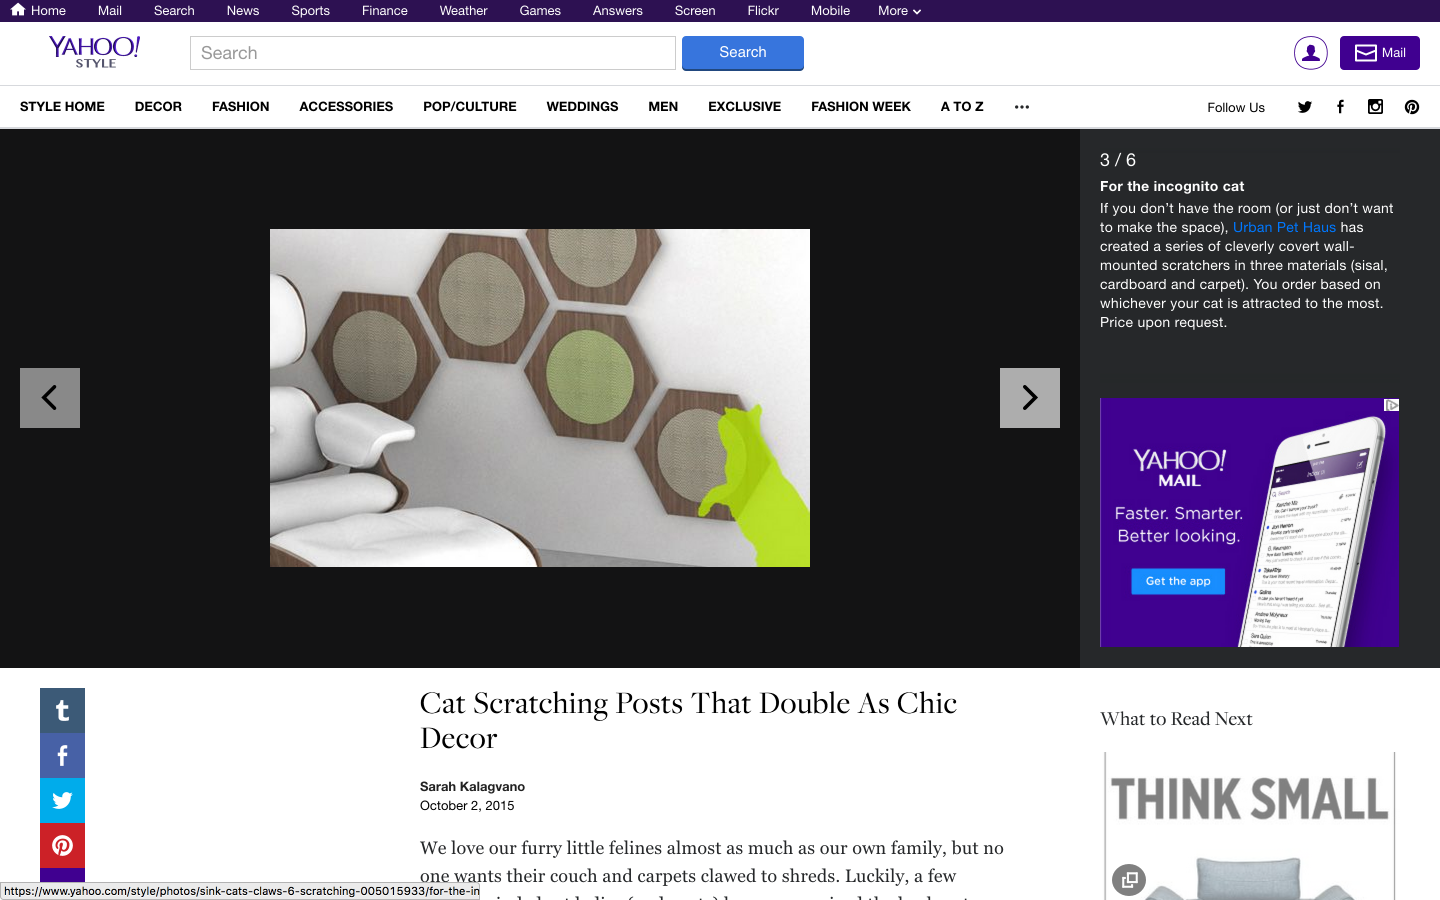 Yahoo! STYLE DECOR 壁に貼る猫用爪とぎ